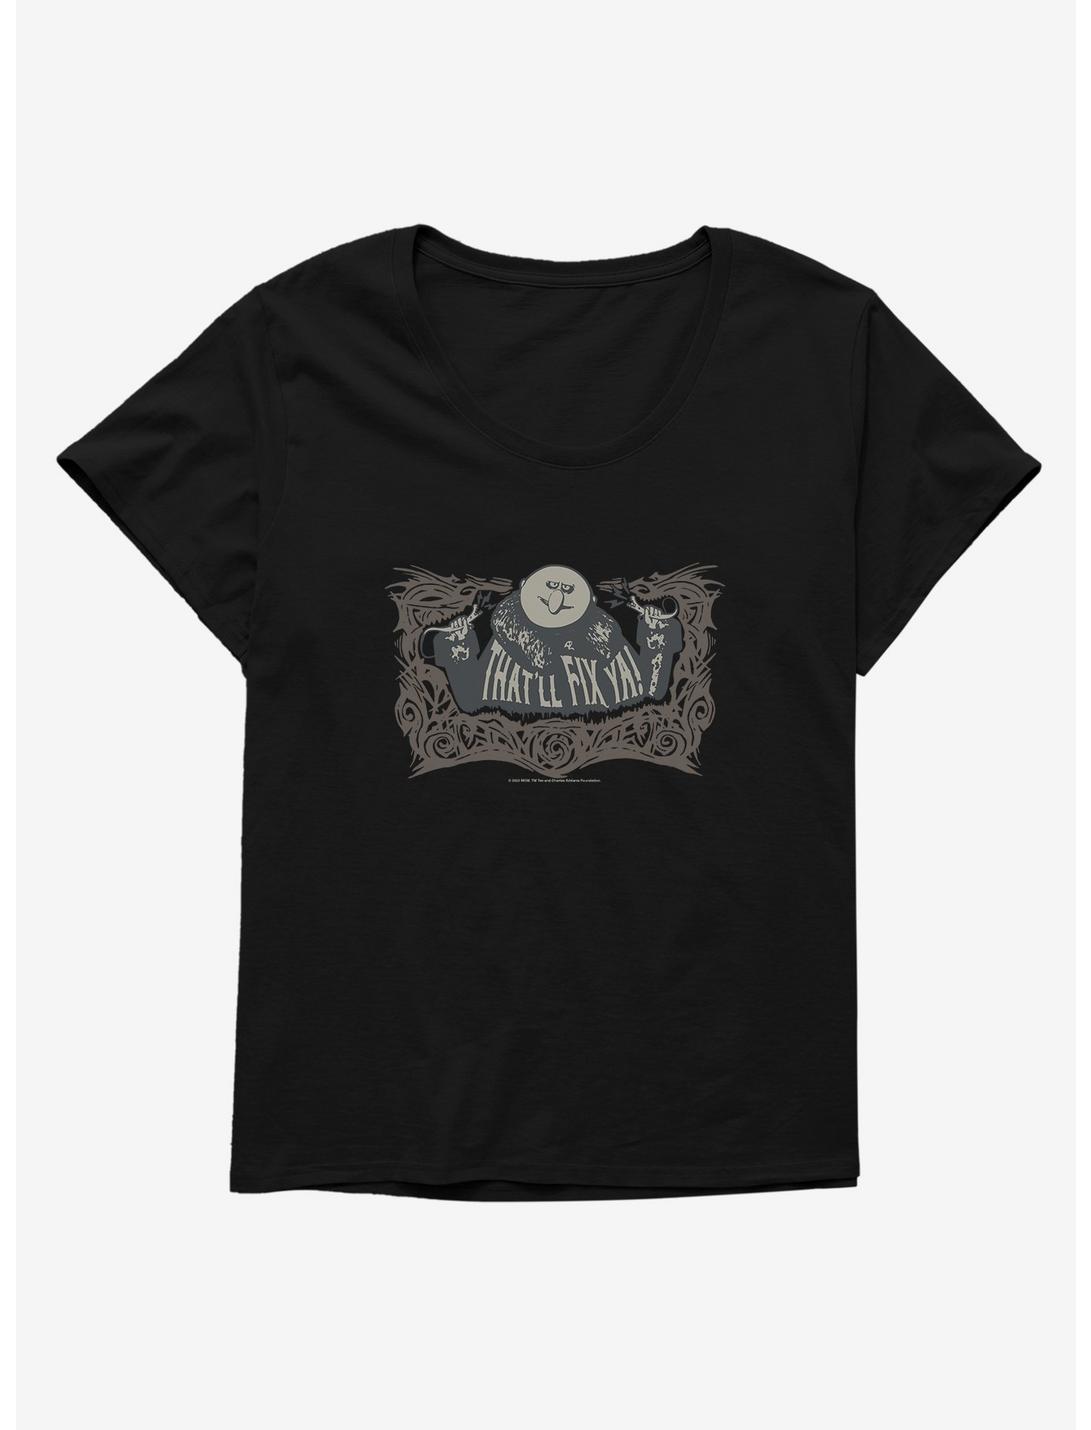 Addams Family That'll Fix Ya! Womens T-Shirt Plus Size, BLACK, hi-res